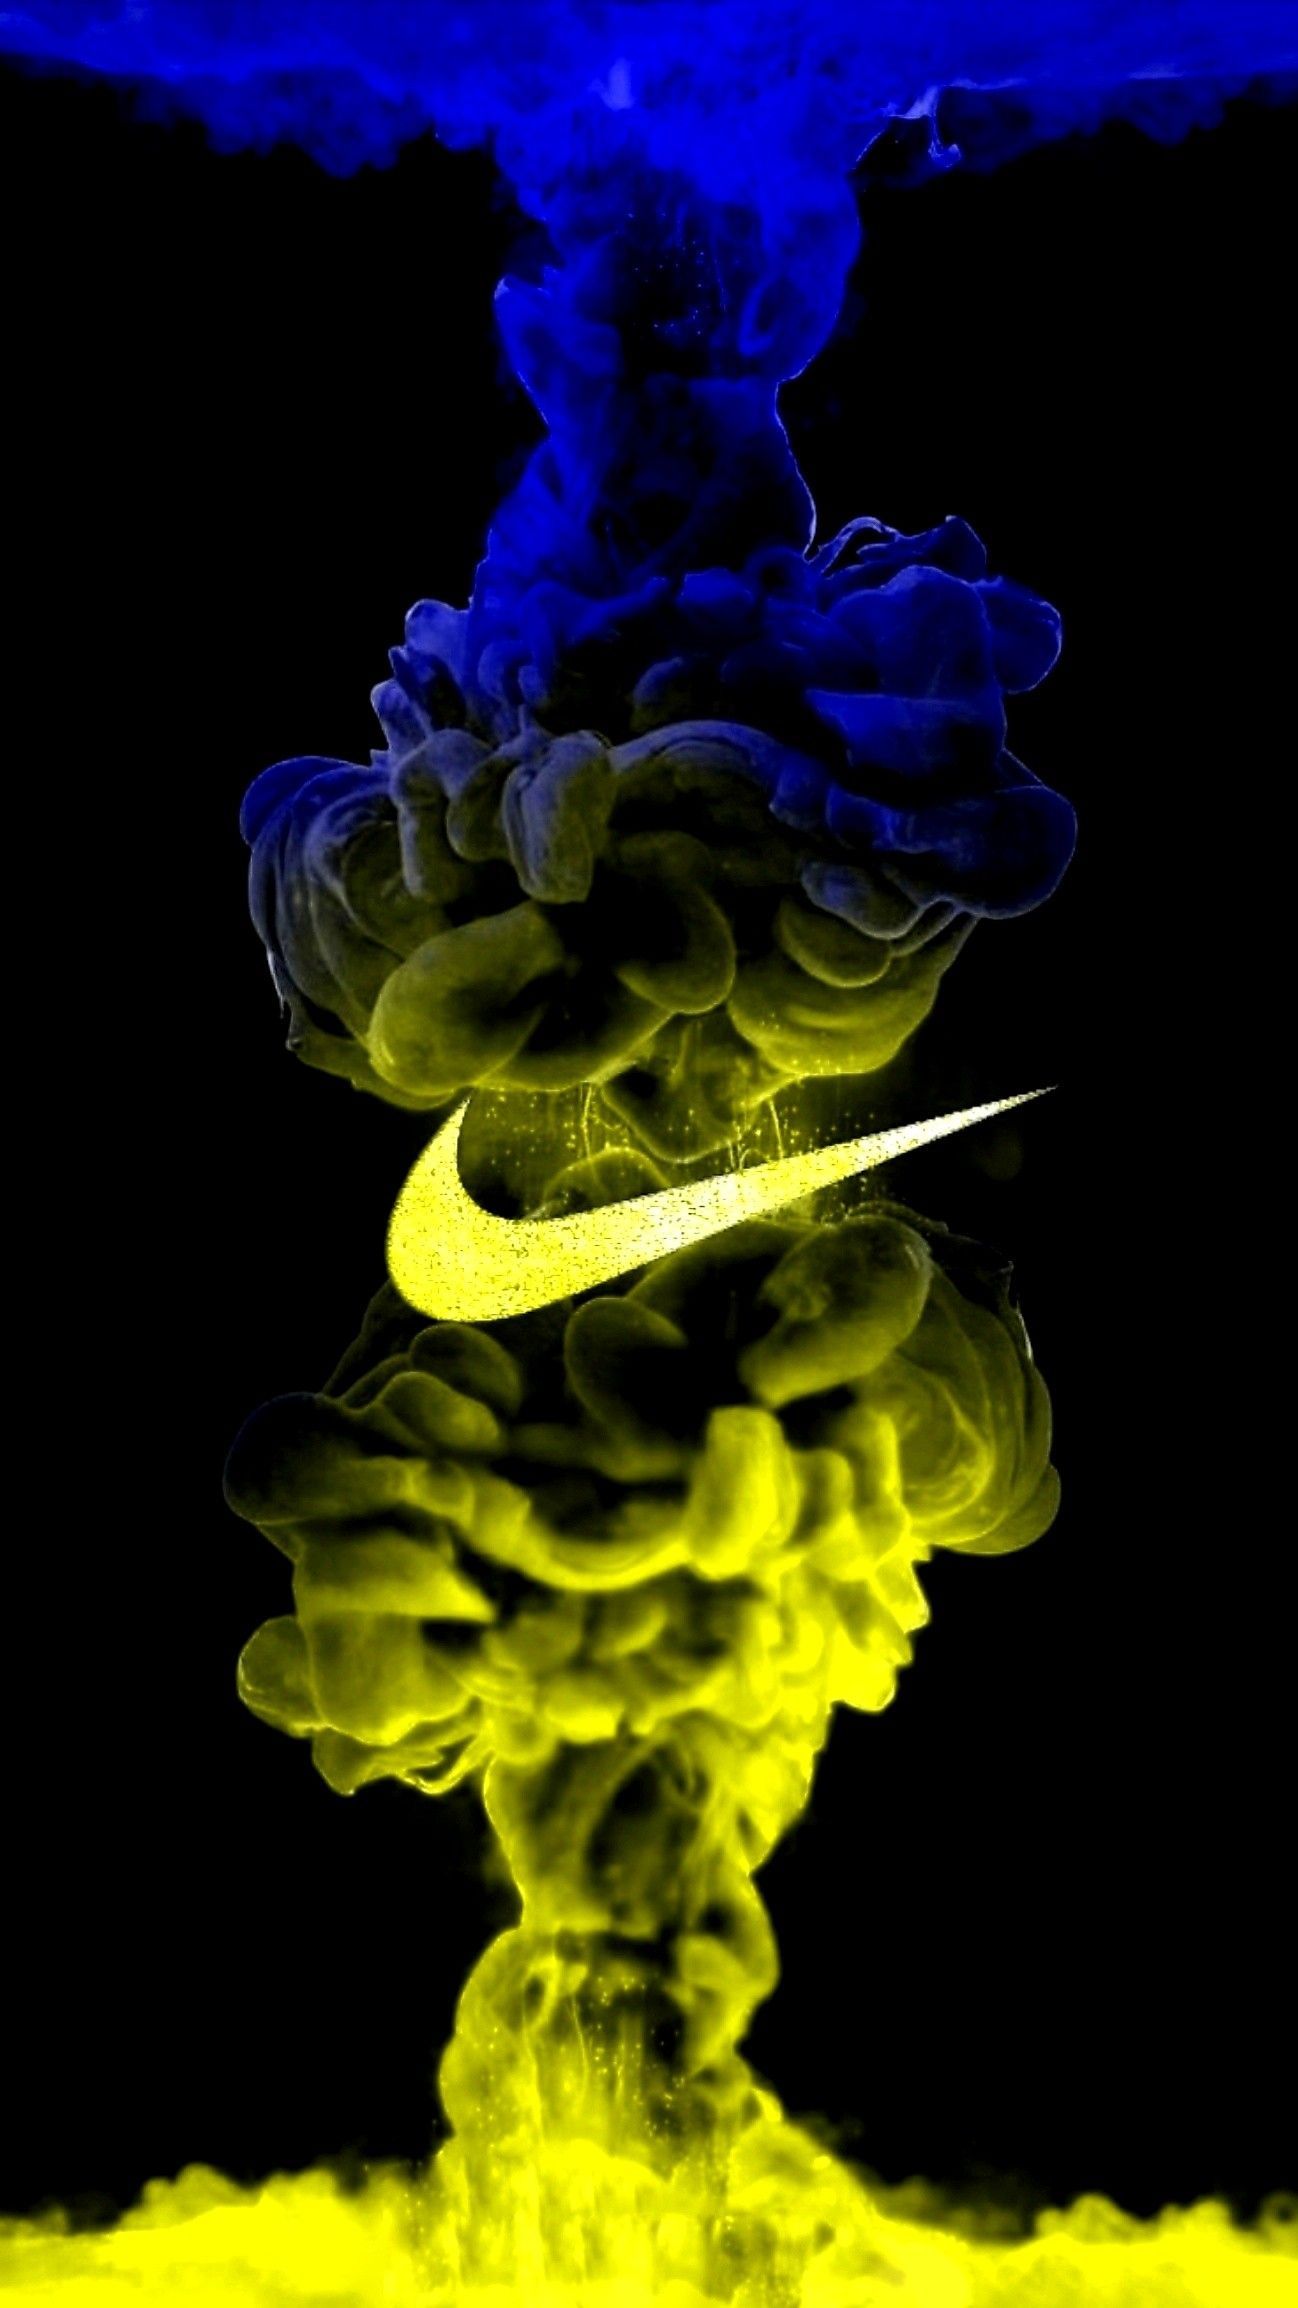 Nike wallpaper. Cool nike wallpaper, Nike wallpaper, Nike wallpaper background